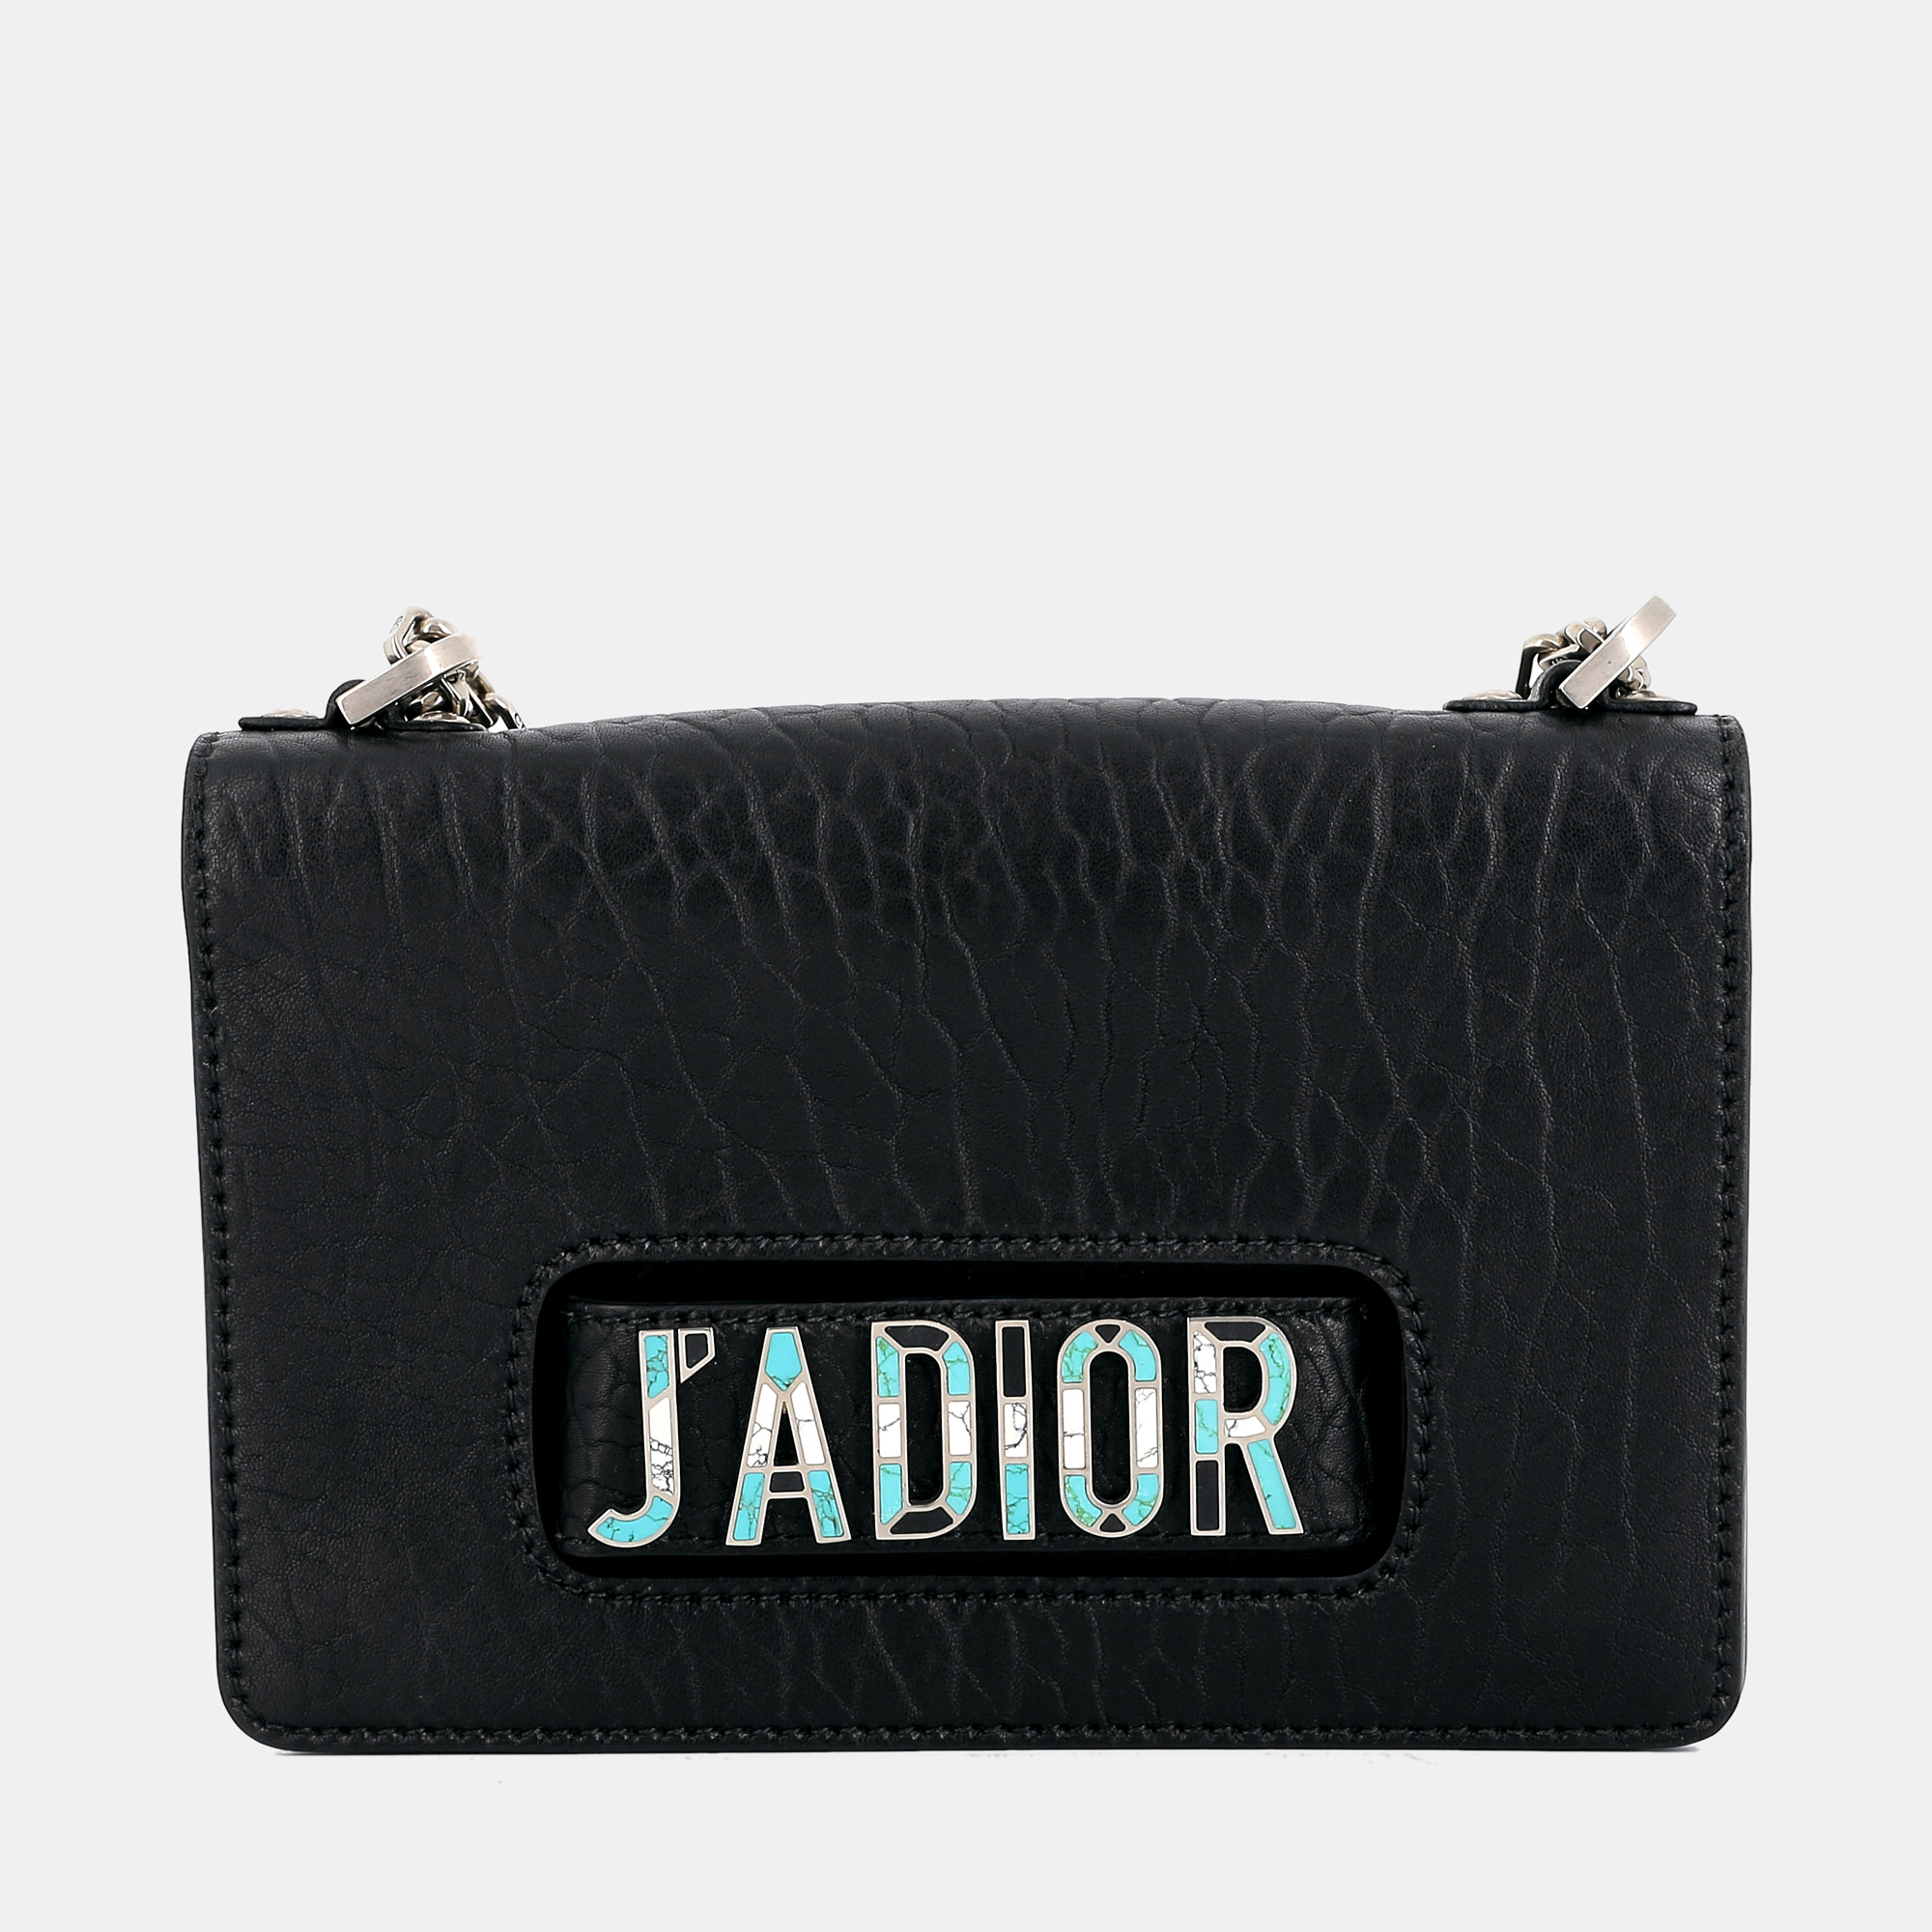 Dior Black Textured Leather Small J'adior Flap Shoulder Bag